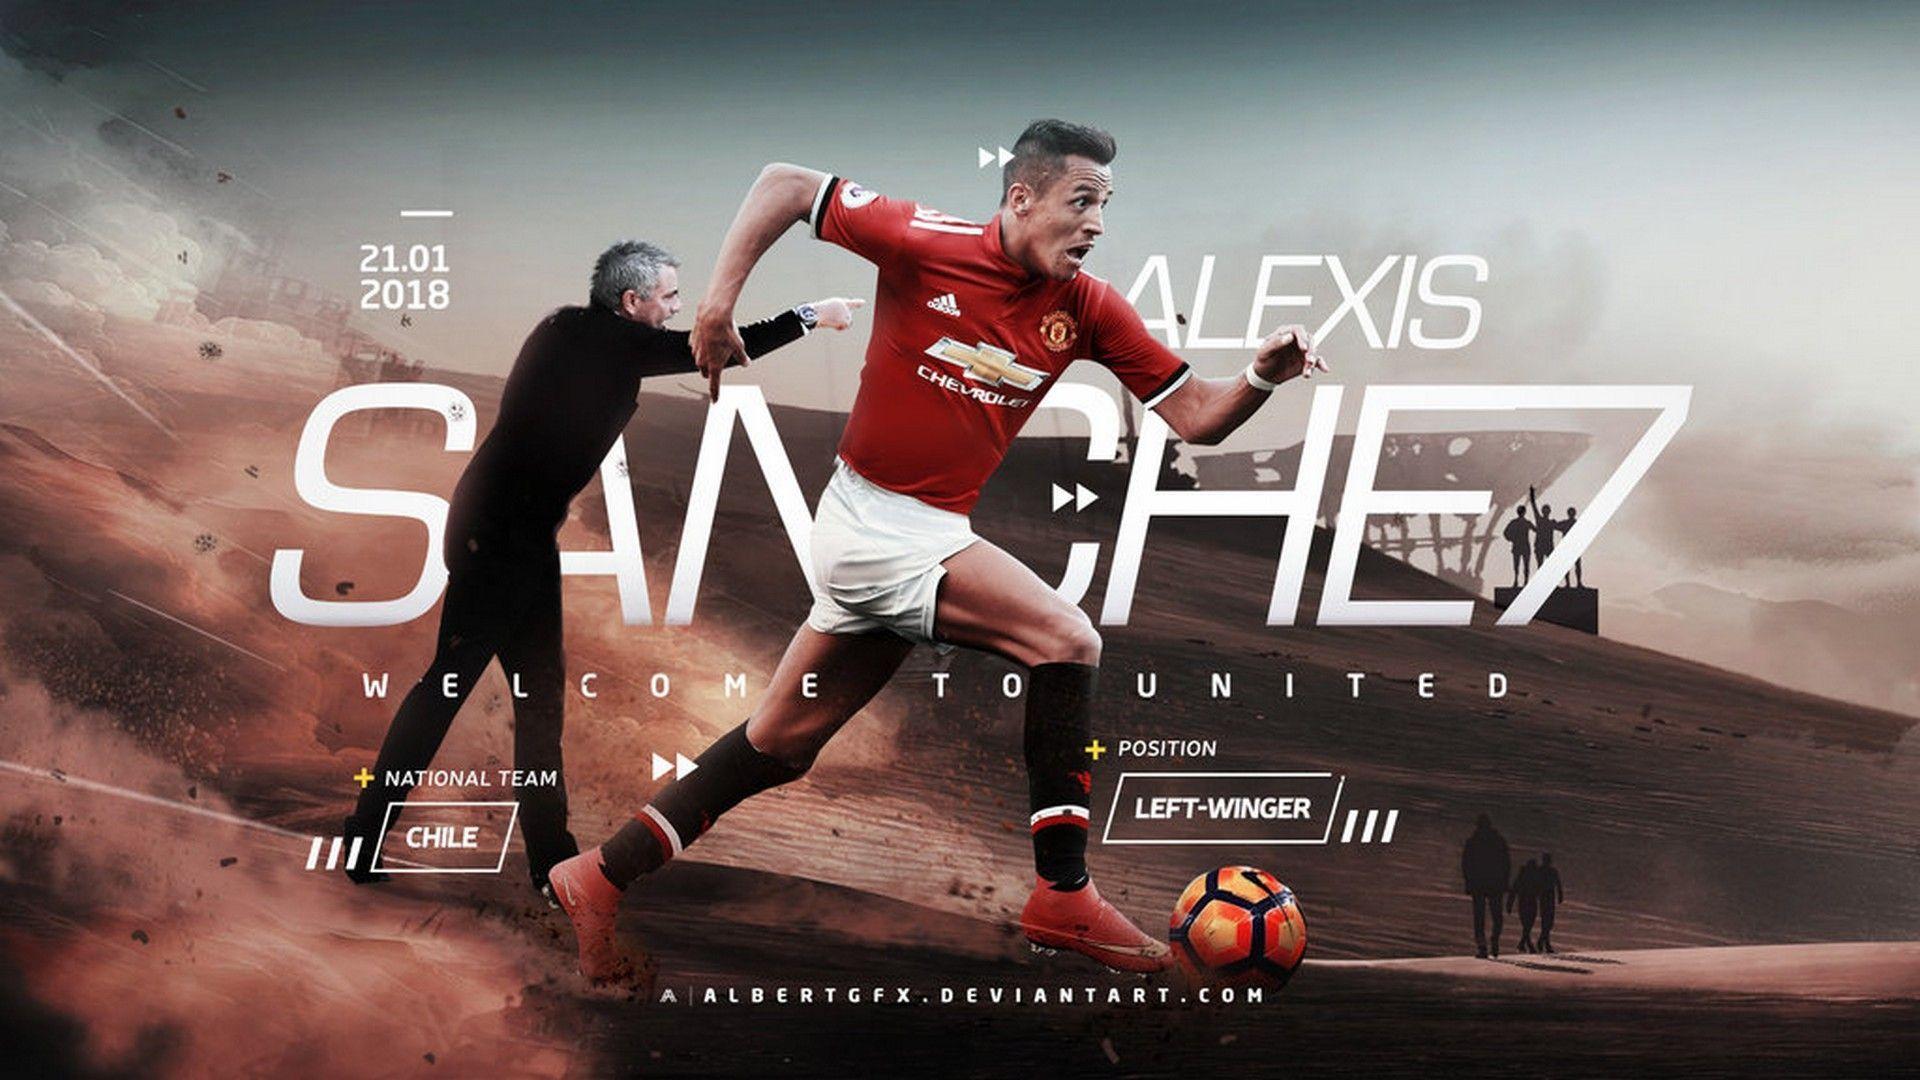 Alexis Sanchez 7 Manchester United Wallpaper HD. Manchester United